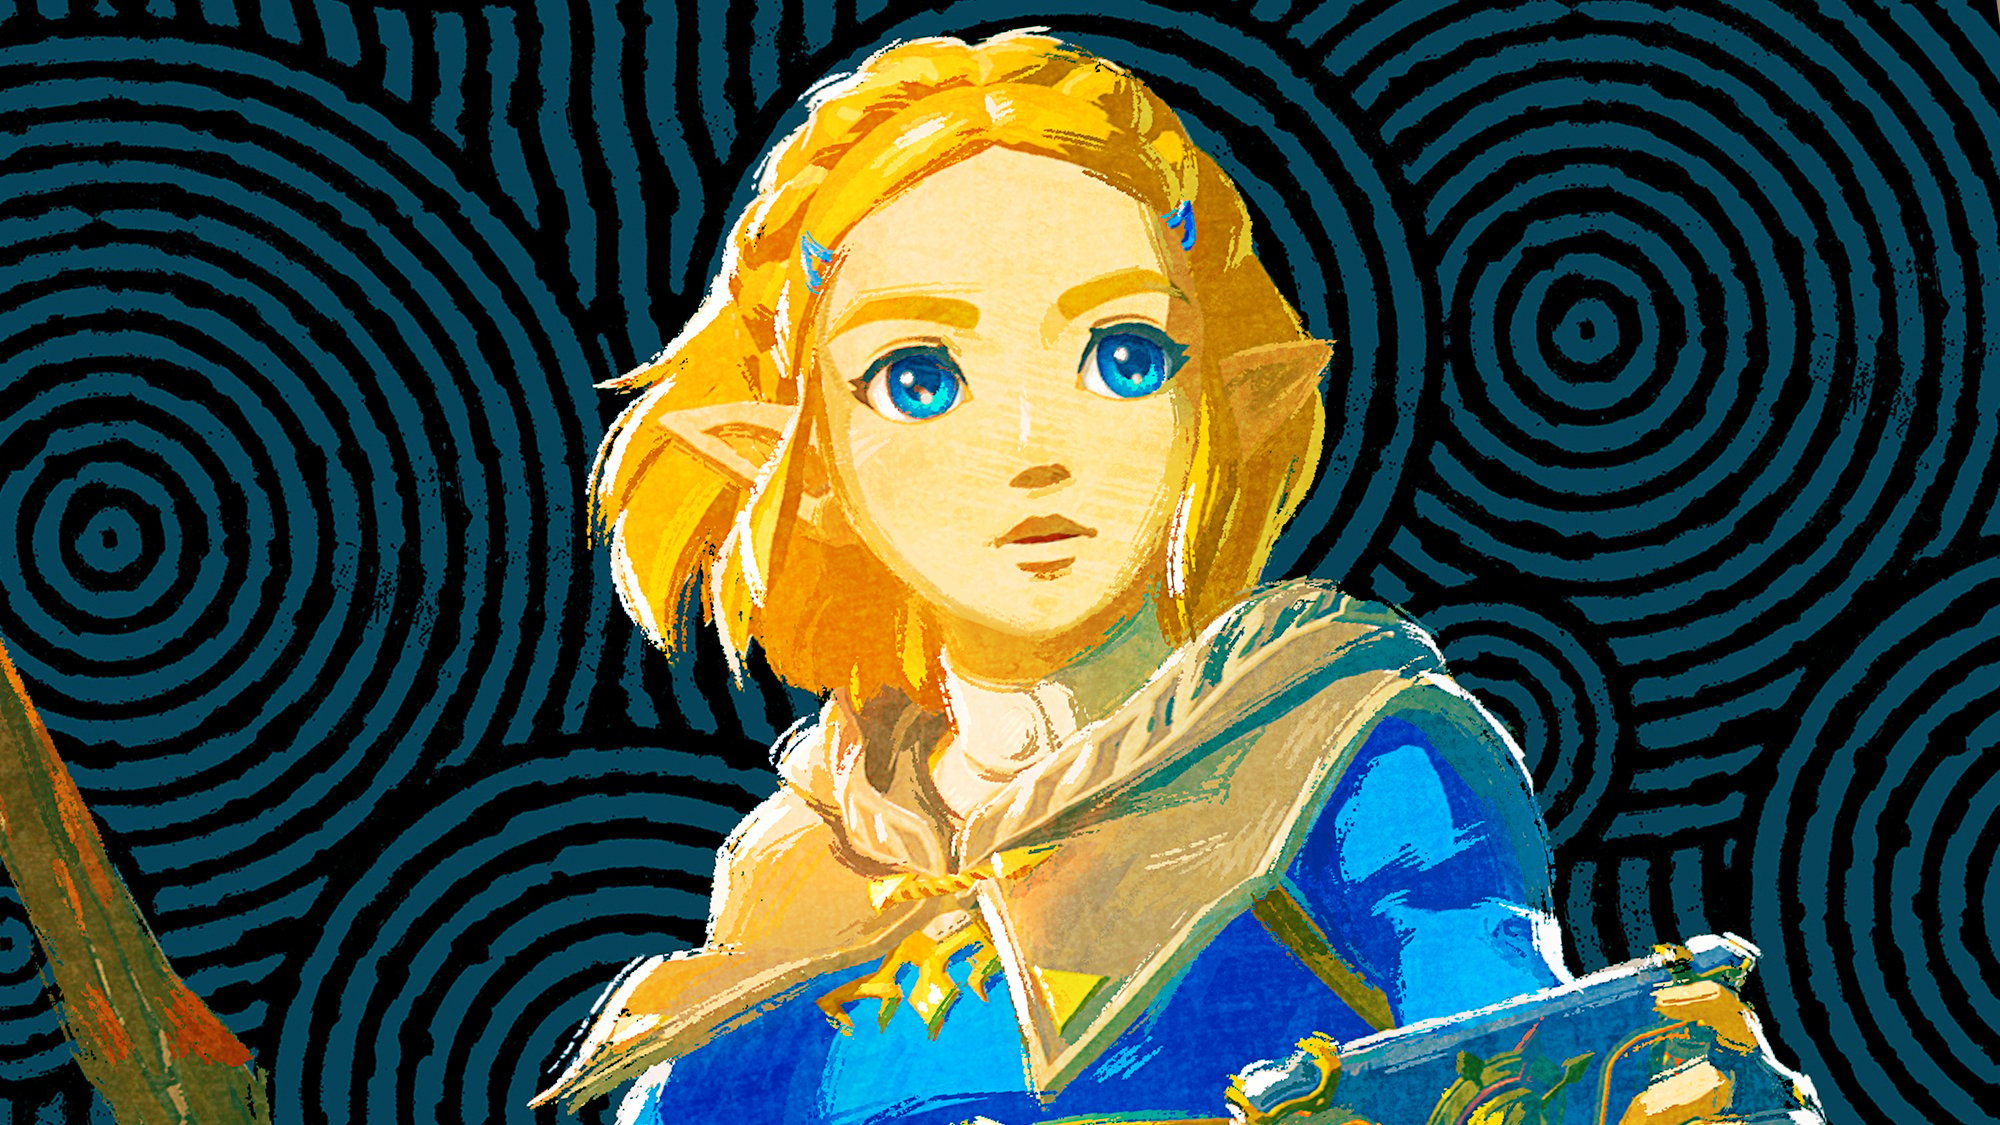 Zelda Tears of the Kingdom victime de gros leaks, faites attention